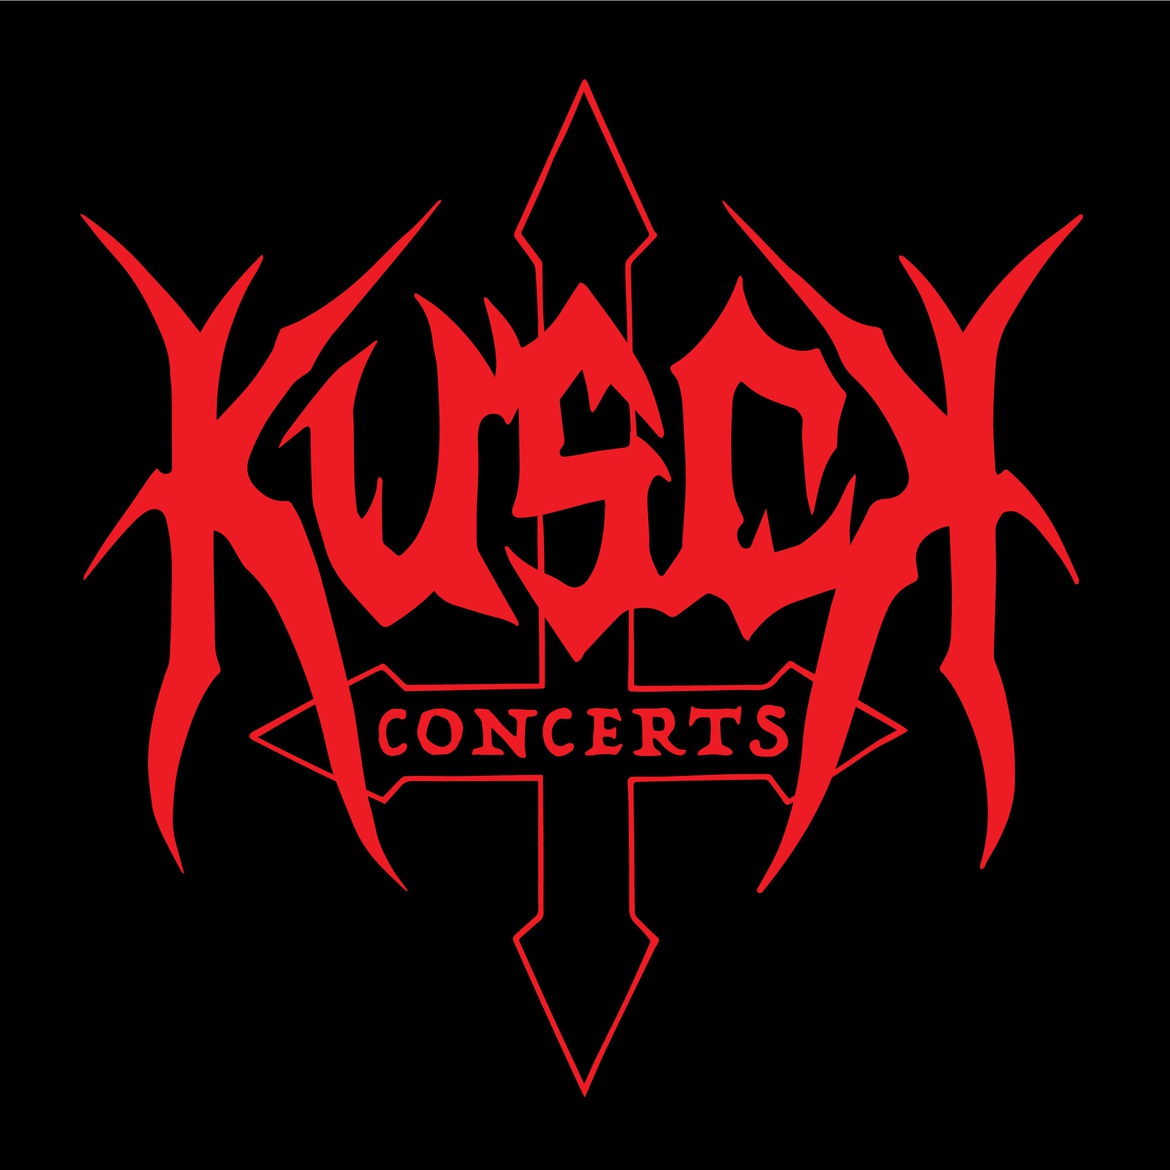 Kusch-Concerts